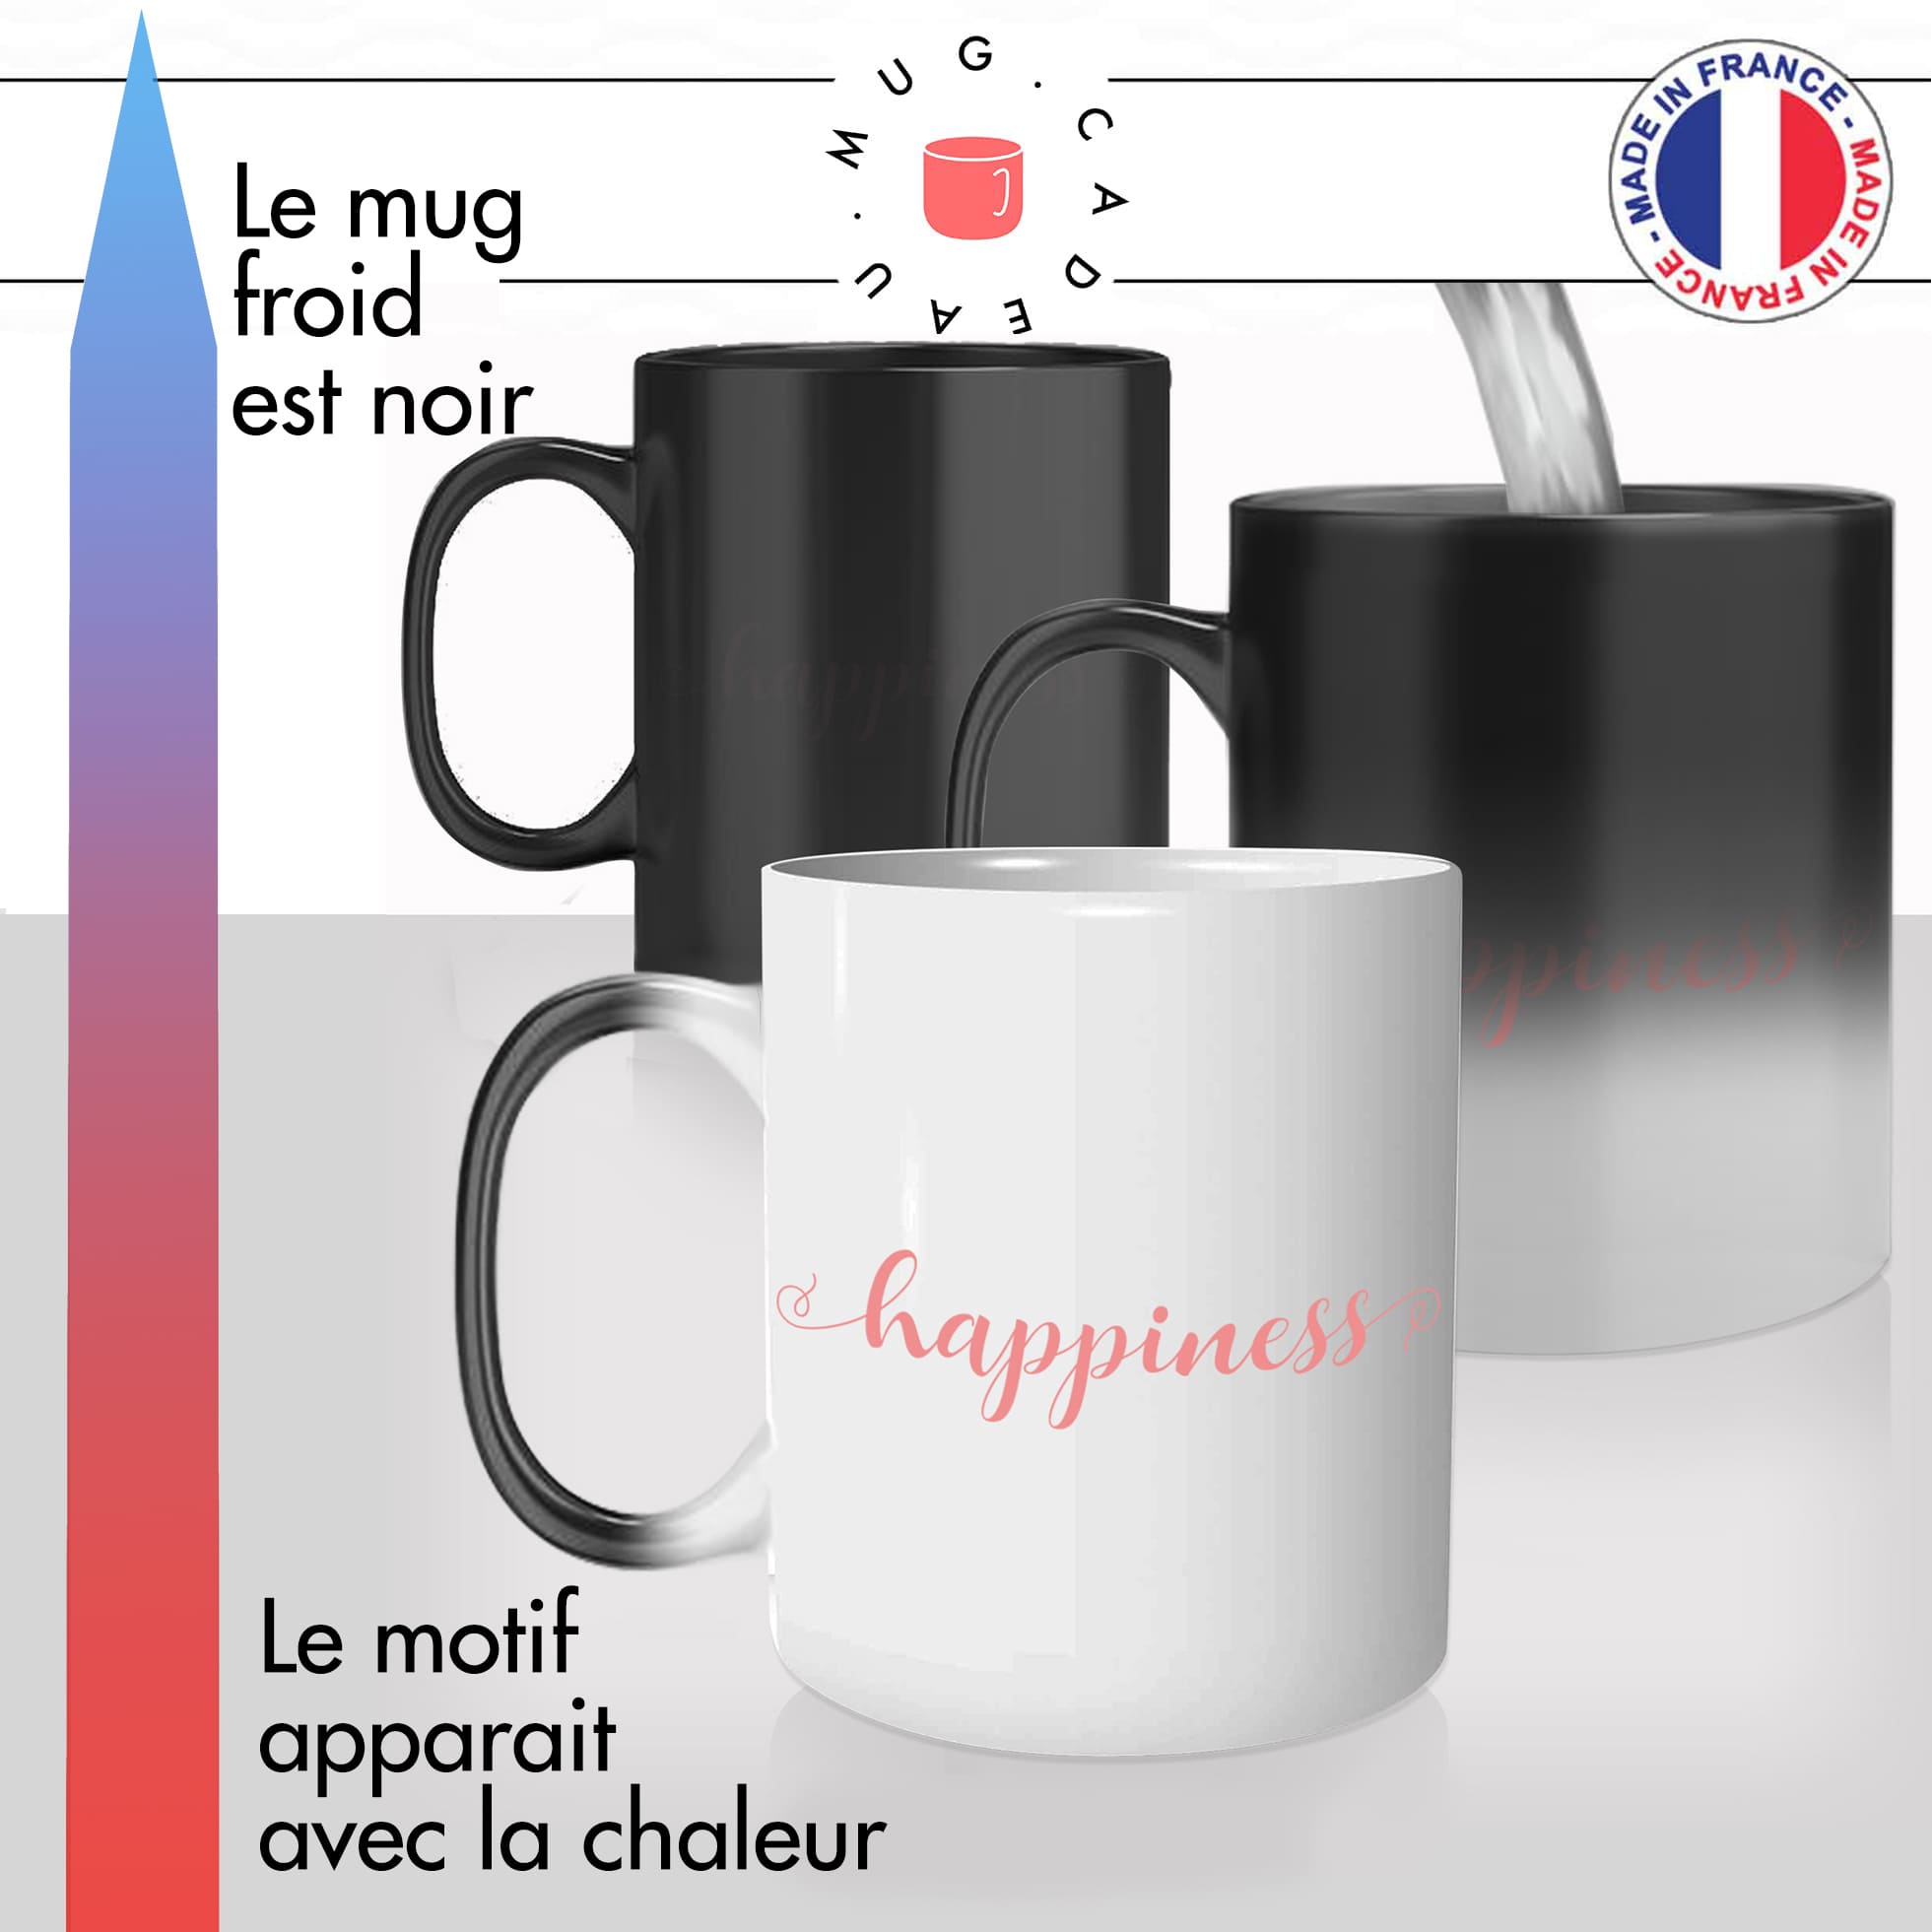 mug magique thermoréactif thermo chauffant citation mot heureux happiness bonheur idée cadeau fun cool original